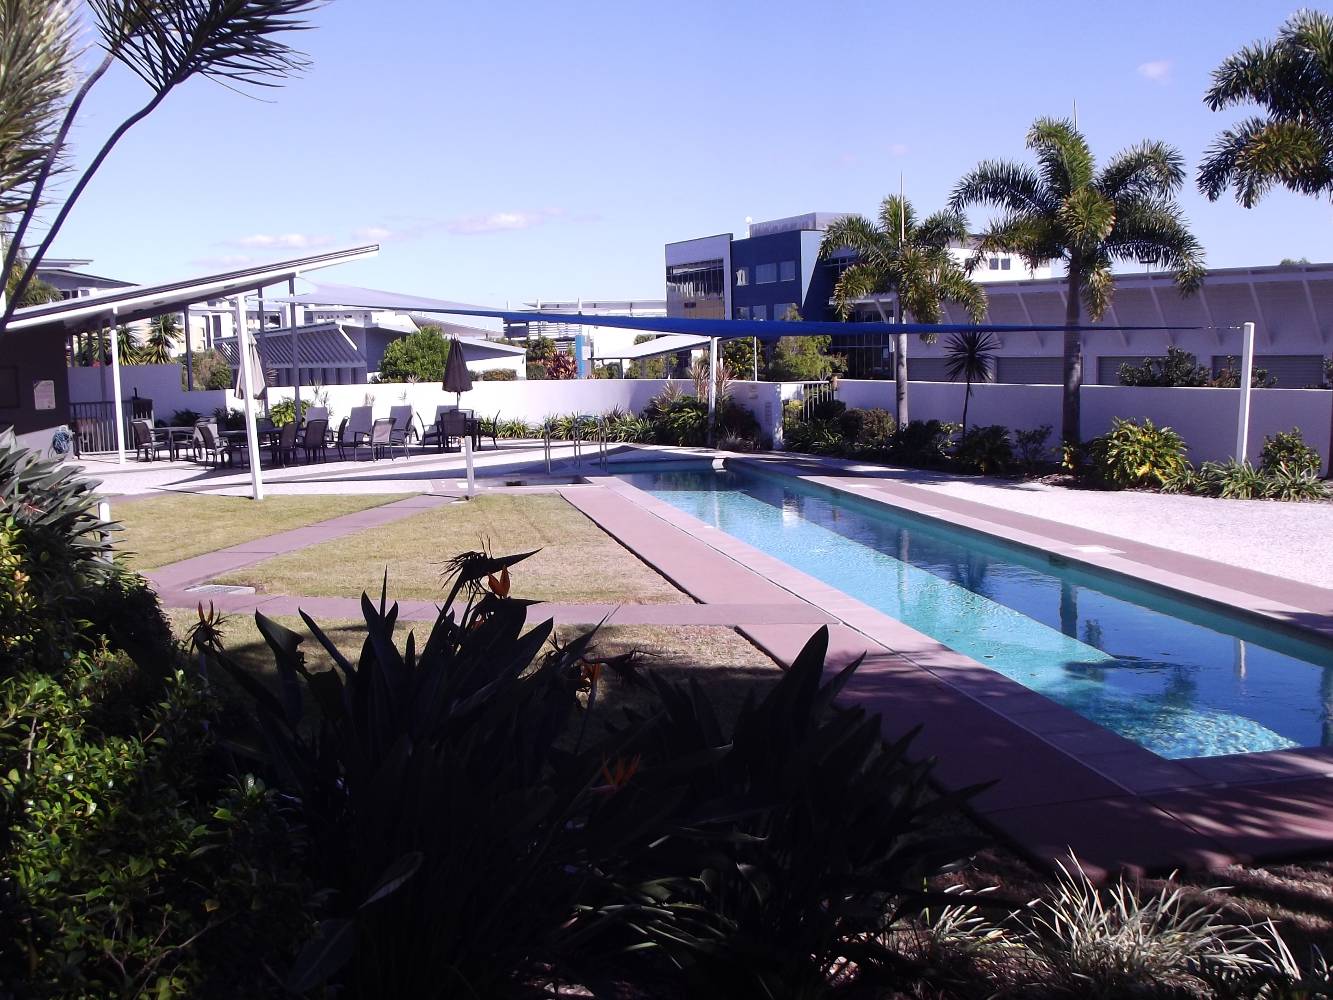 Regatta Apartments Lap Pool & Spa